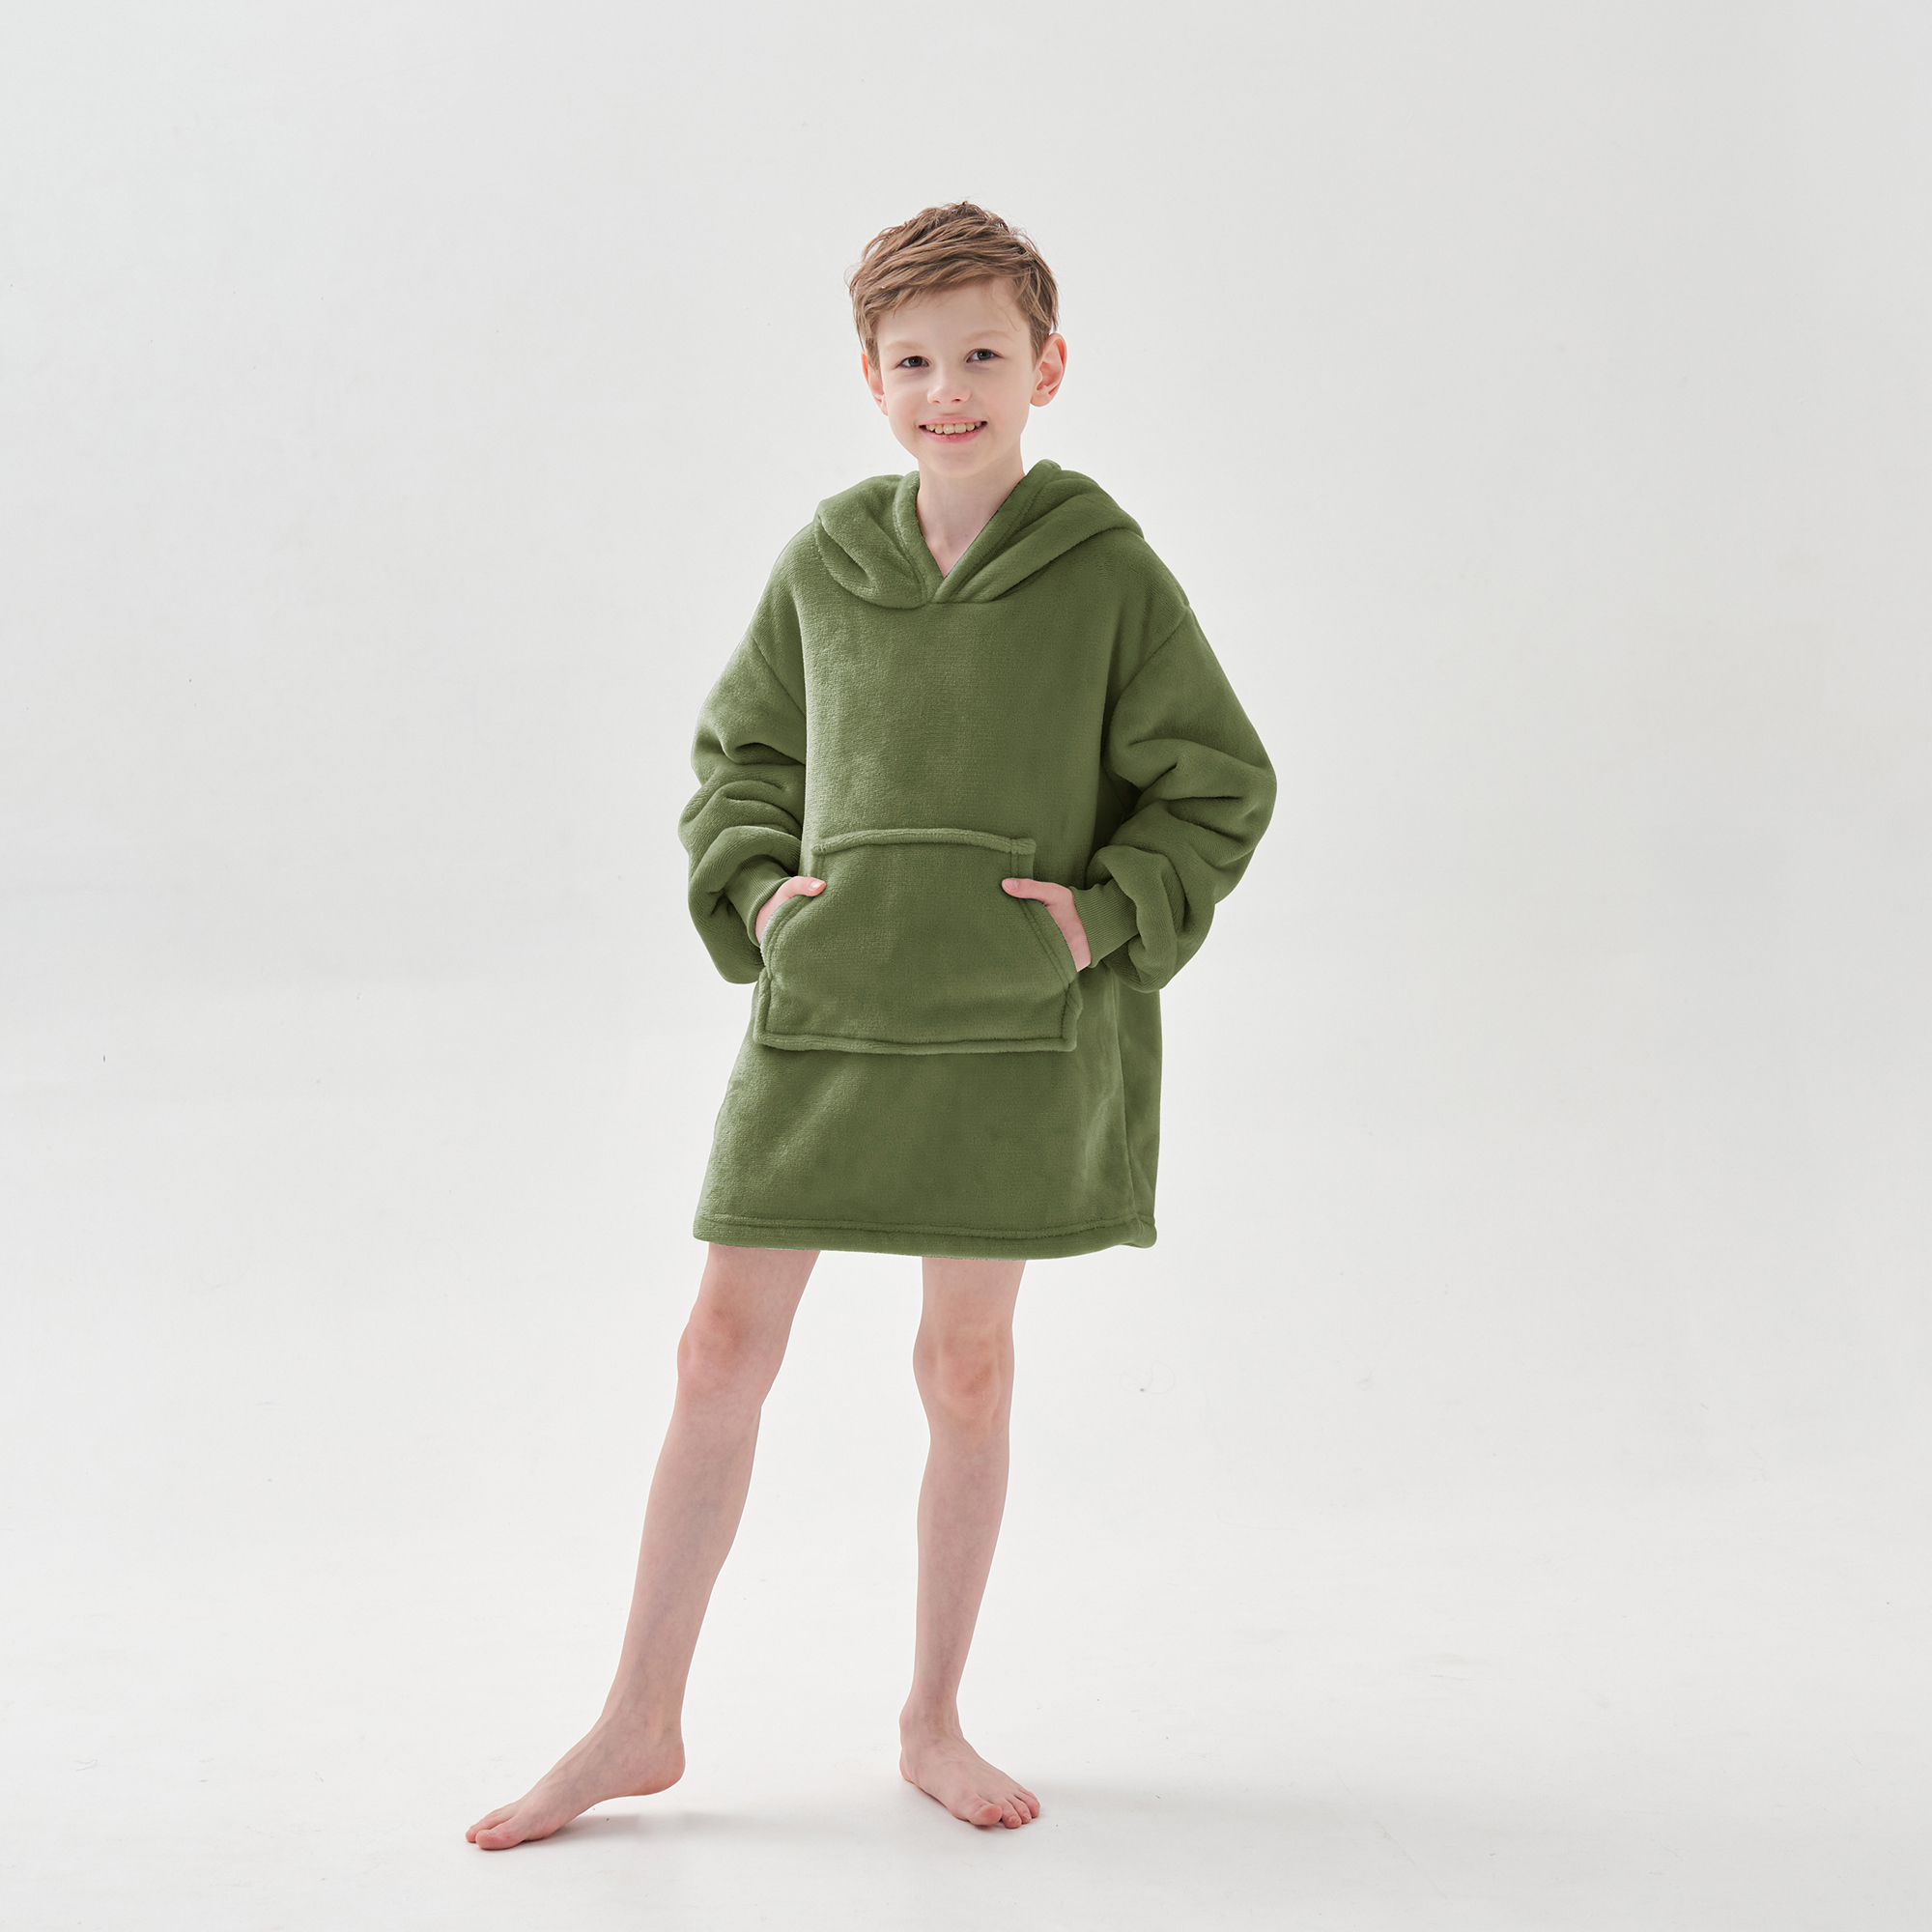 JUNIOR Oversized Hoodie for childern - 50x70 cm - Green